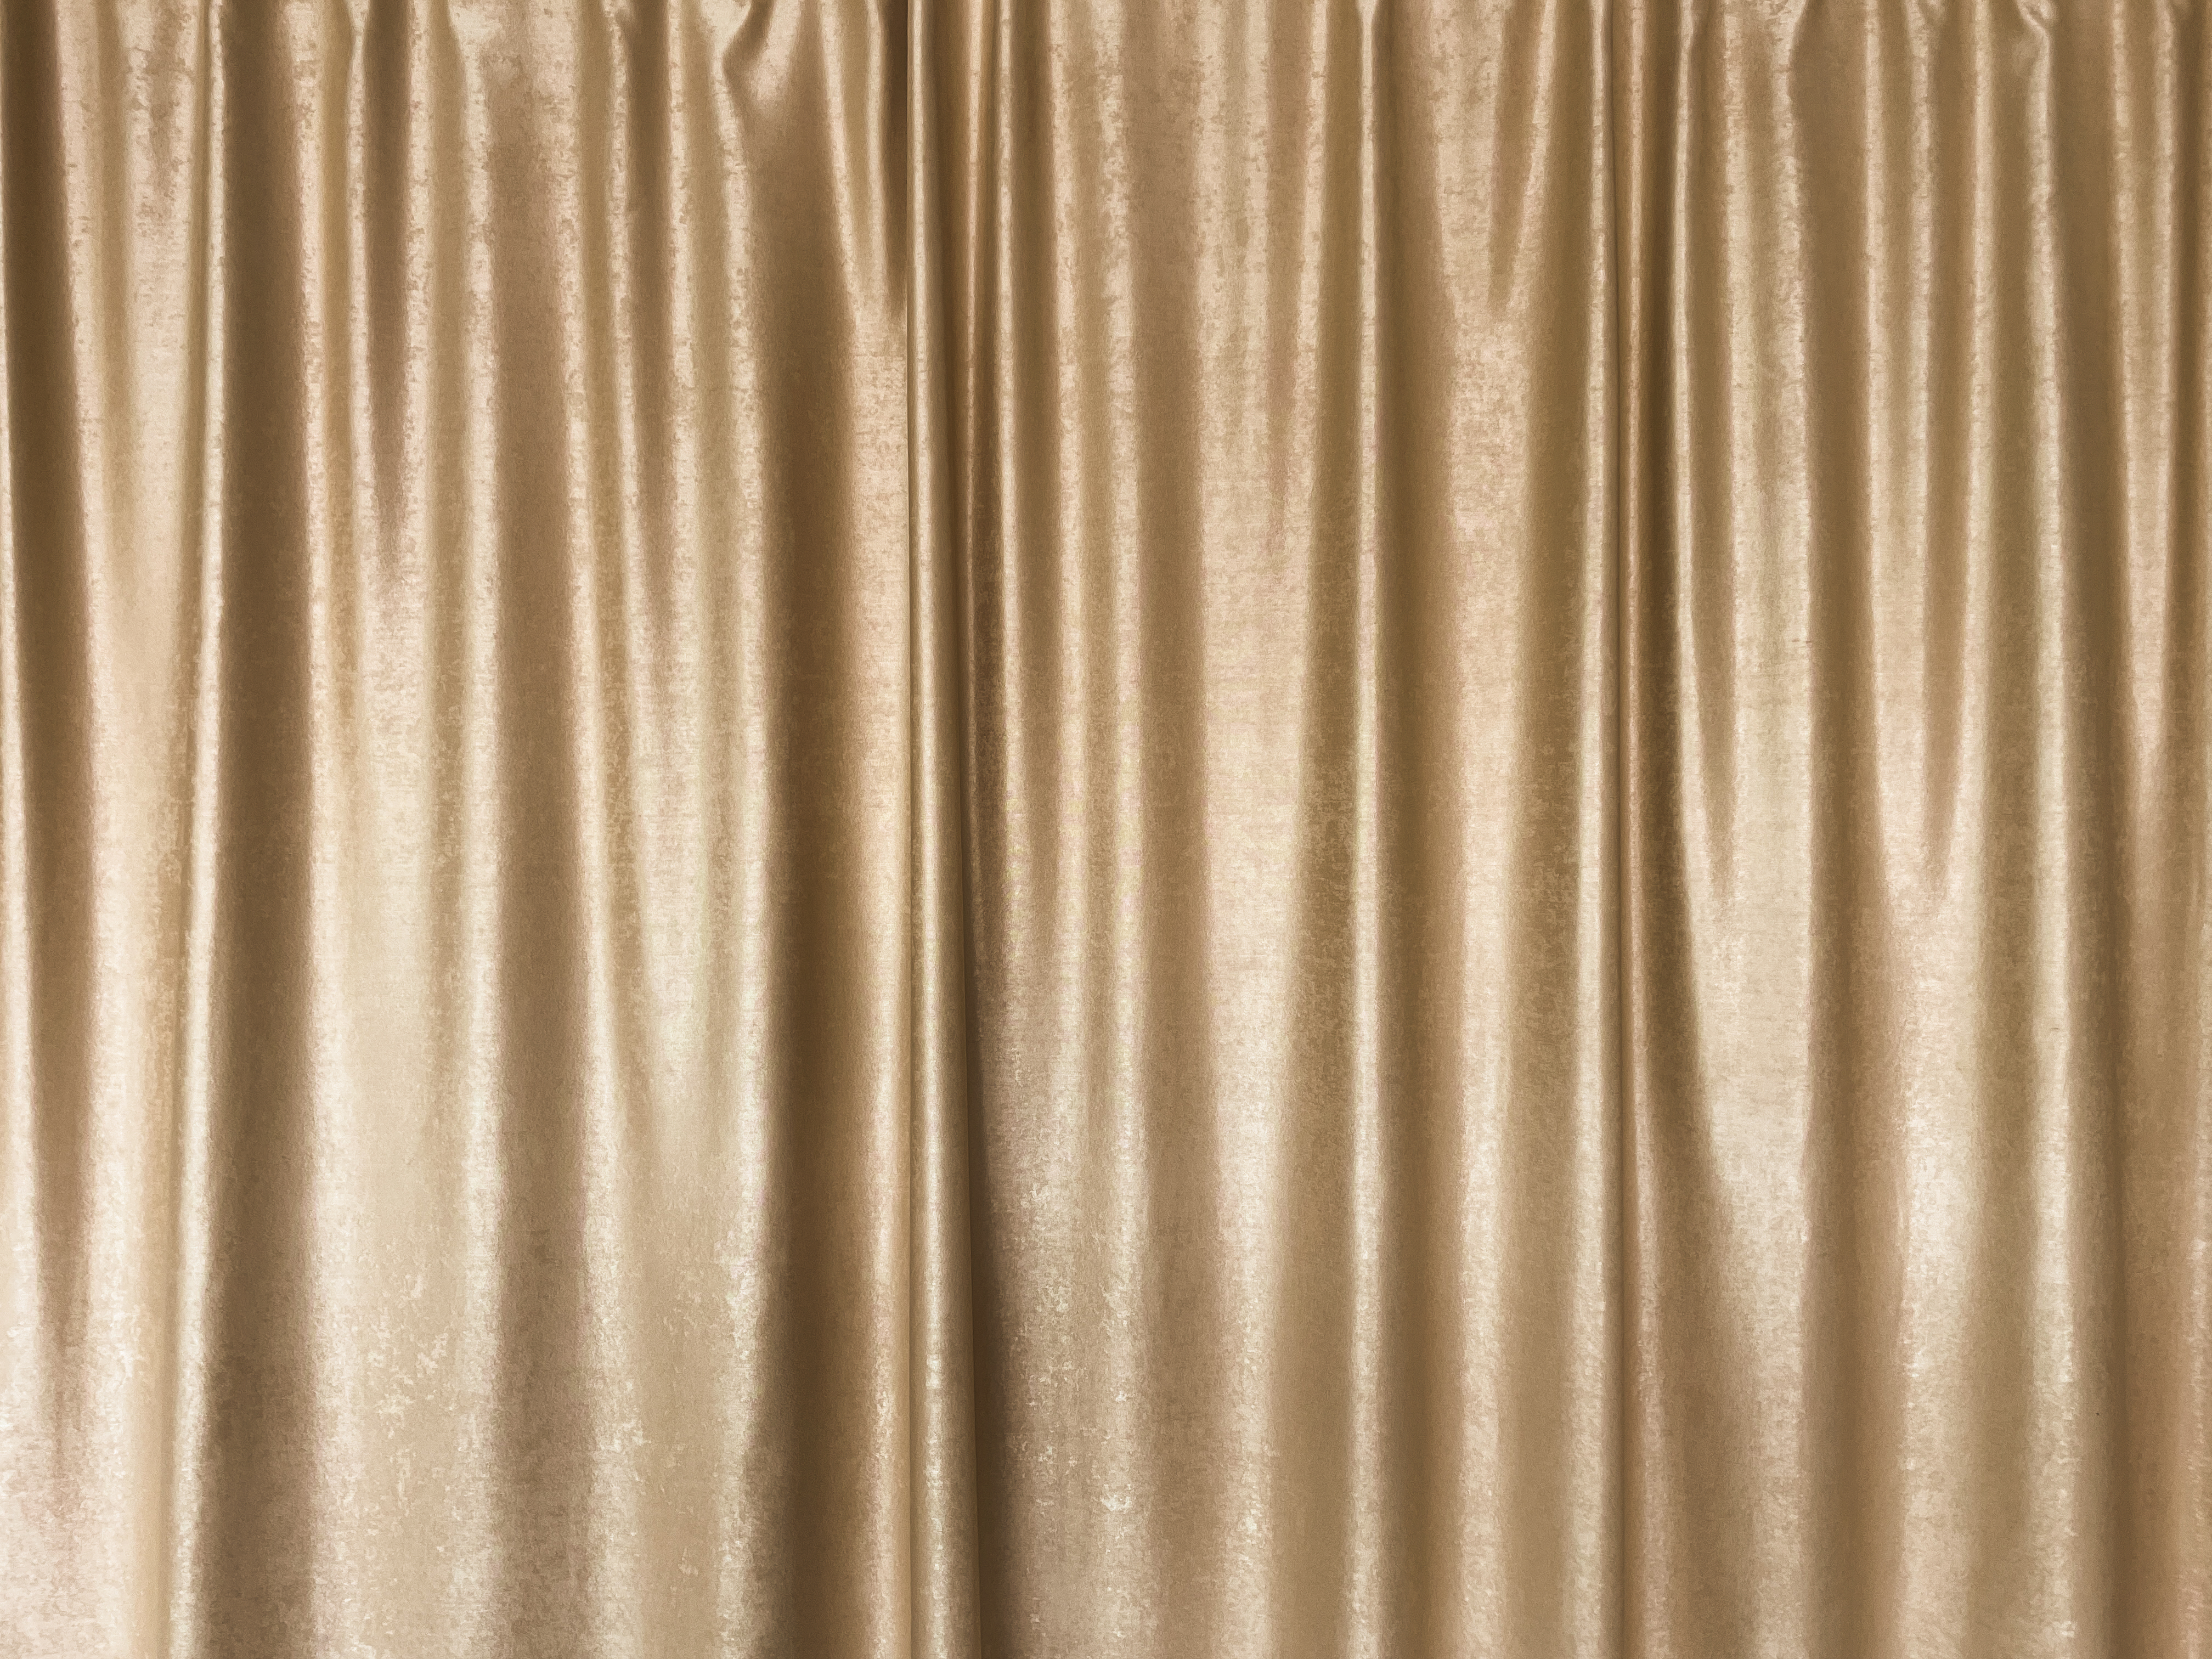 Shiny Golden Curtain Background Free Stock Photo | picjumbo